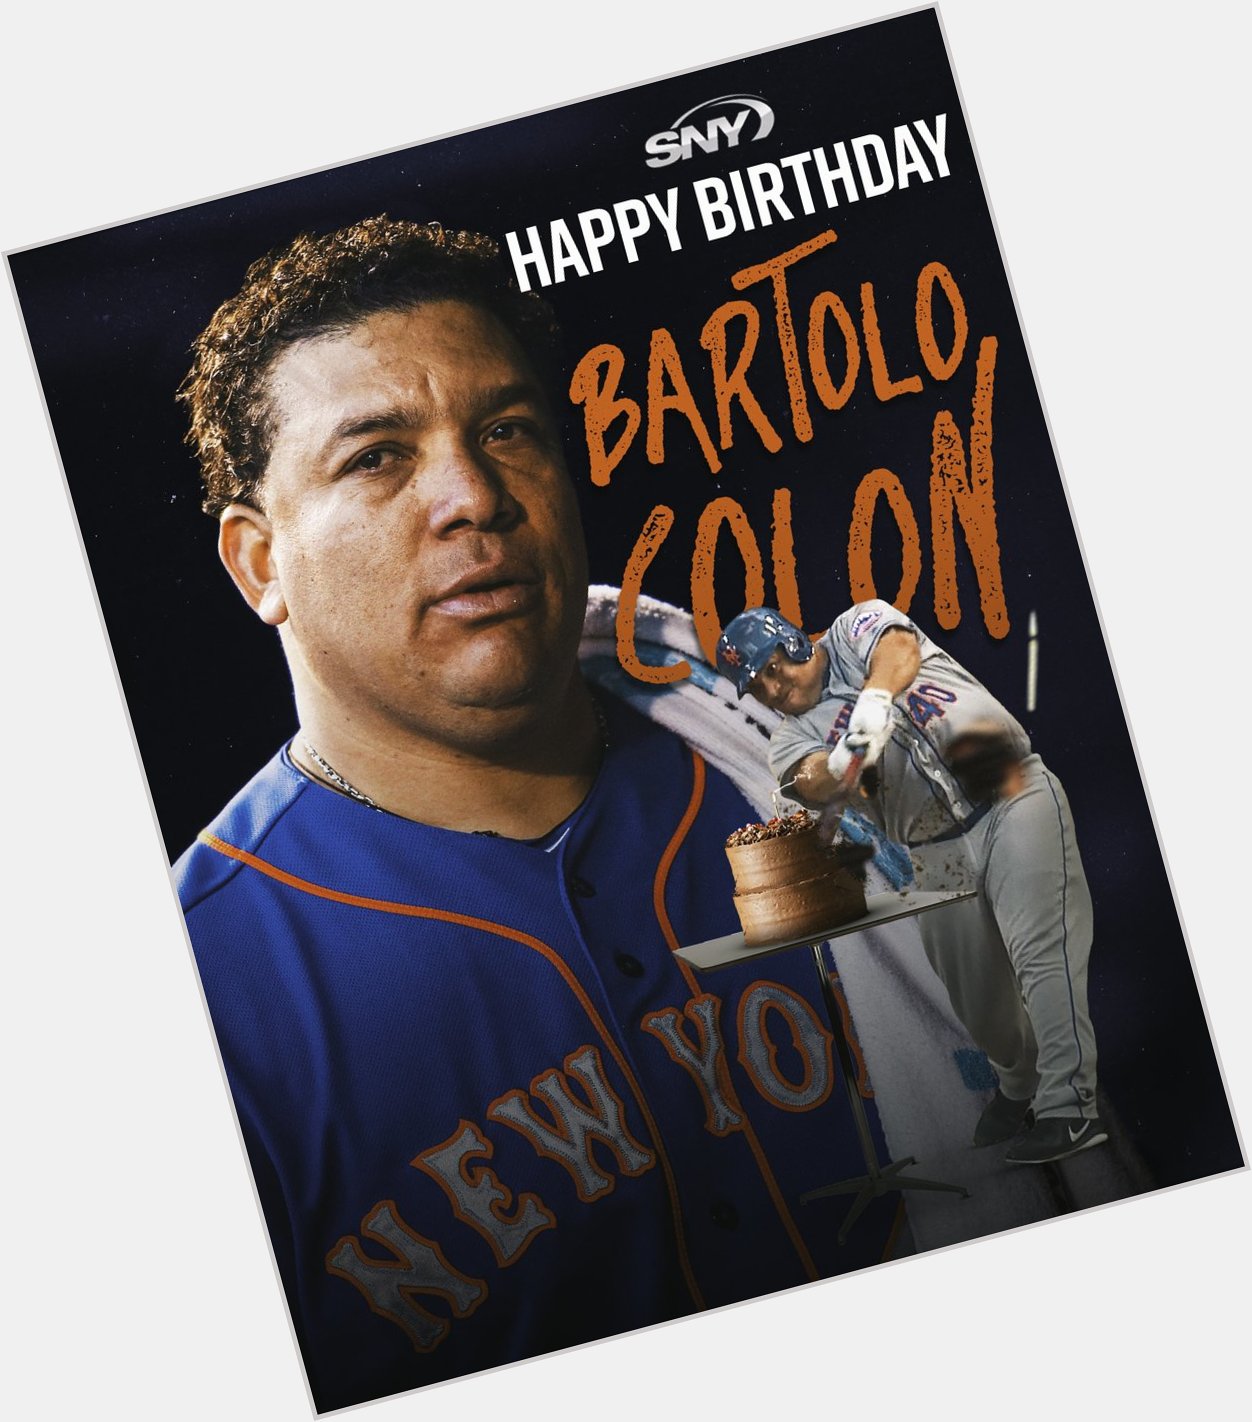 Happy 49th birthday to Bartolo Colon! 